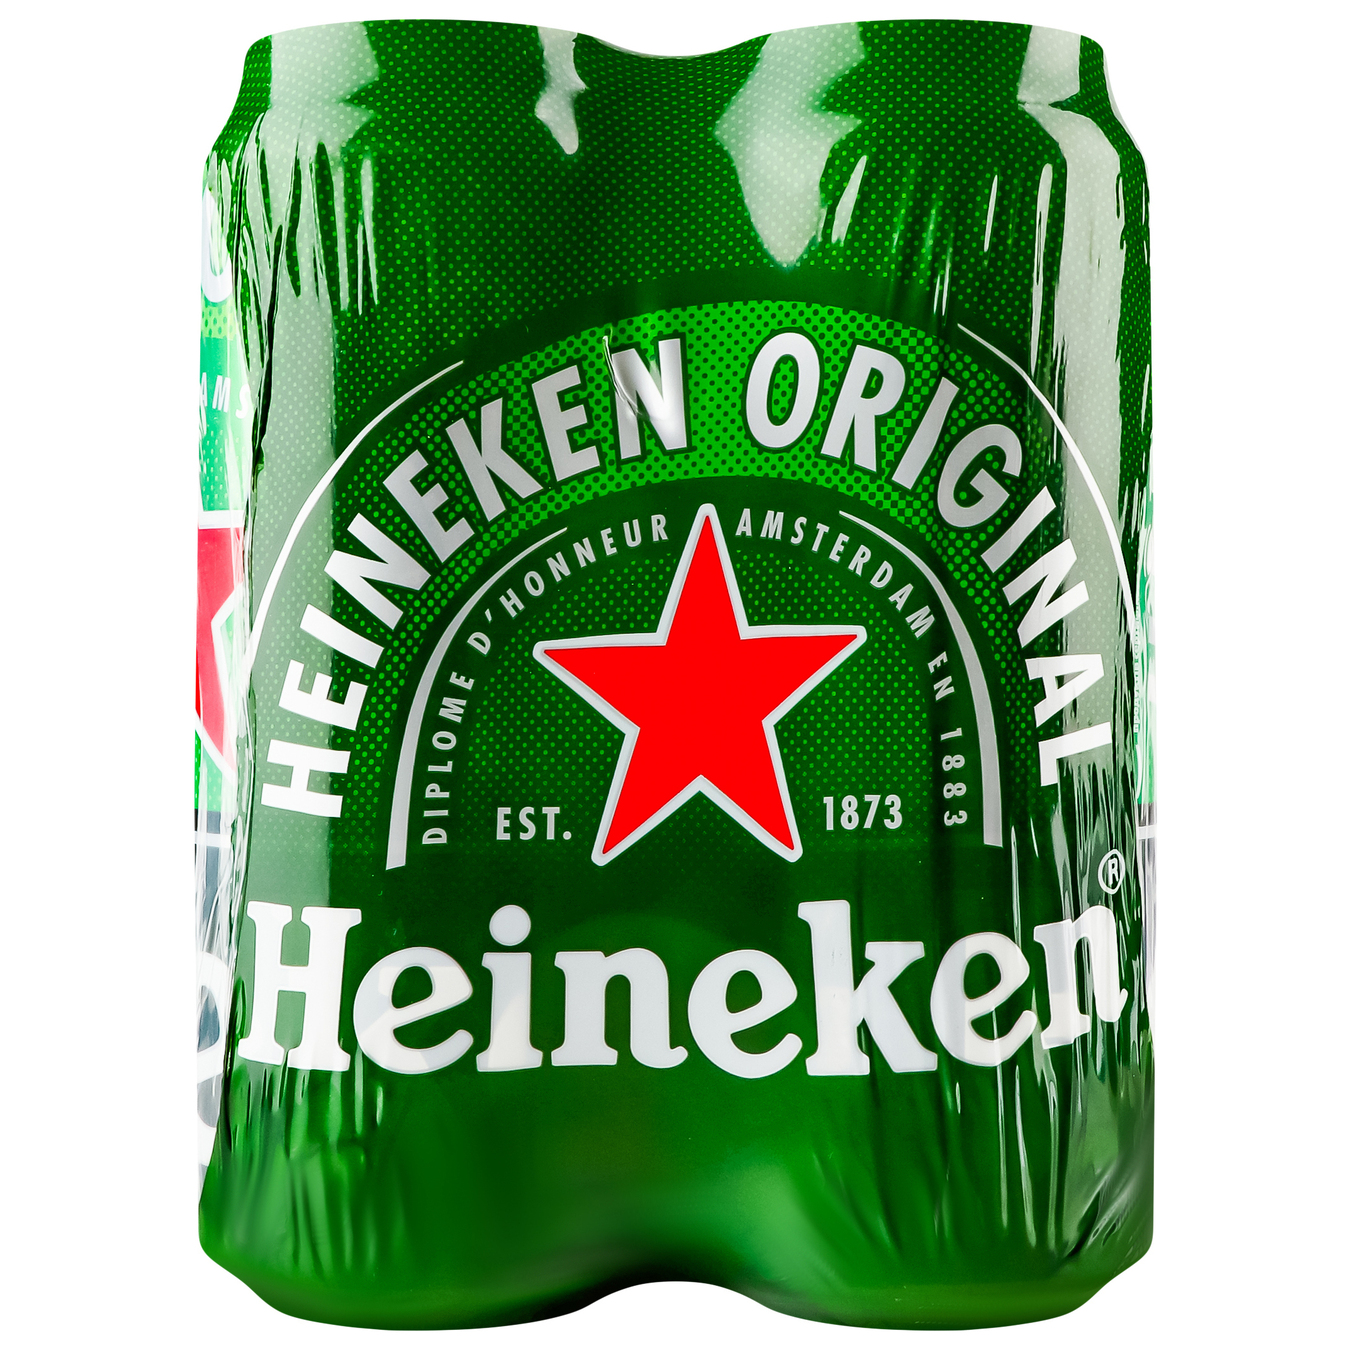 Heineken light filtered pasteurized Beer 5% 4*500ml/pack 2